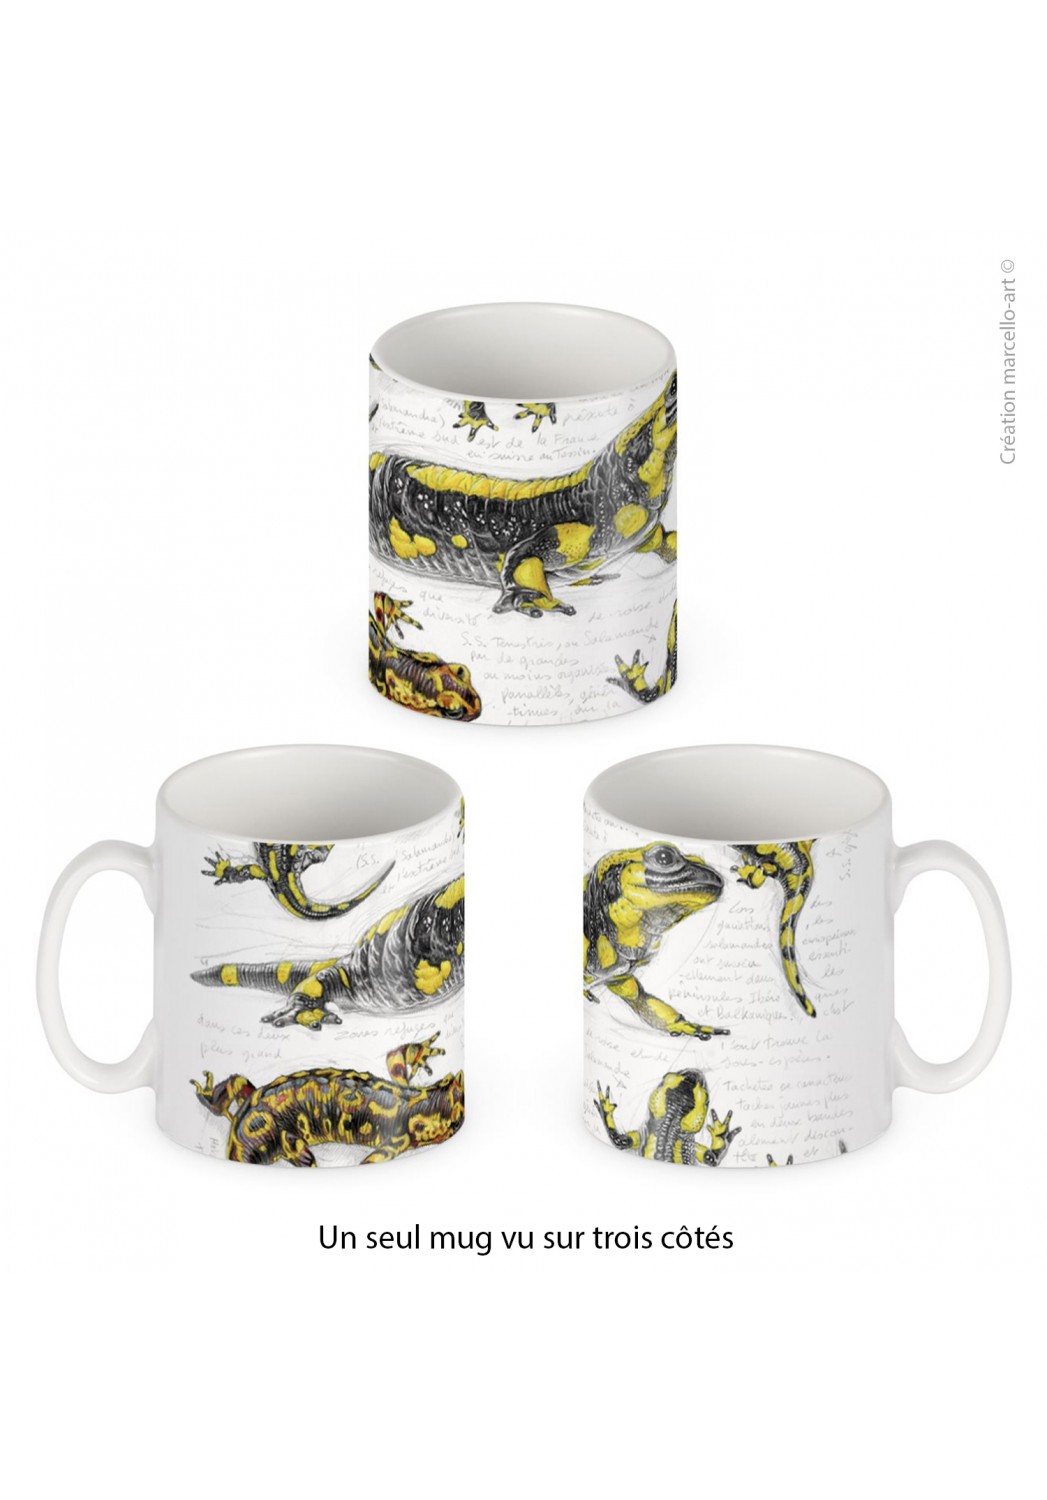 Marcello-art: Decoration accessoiries Porcelain mug 383 salamander